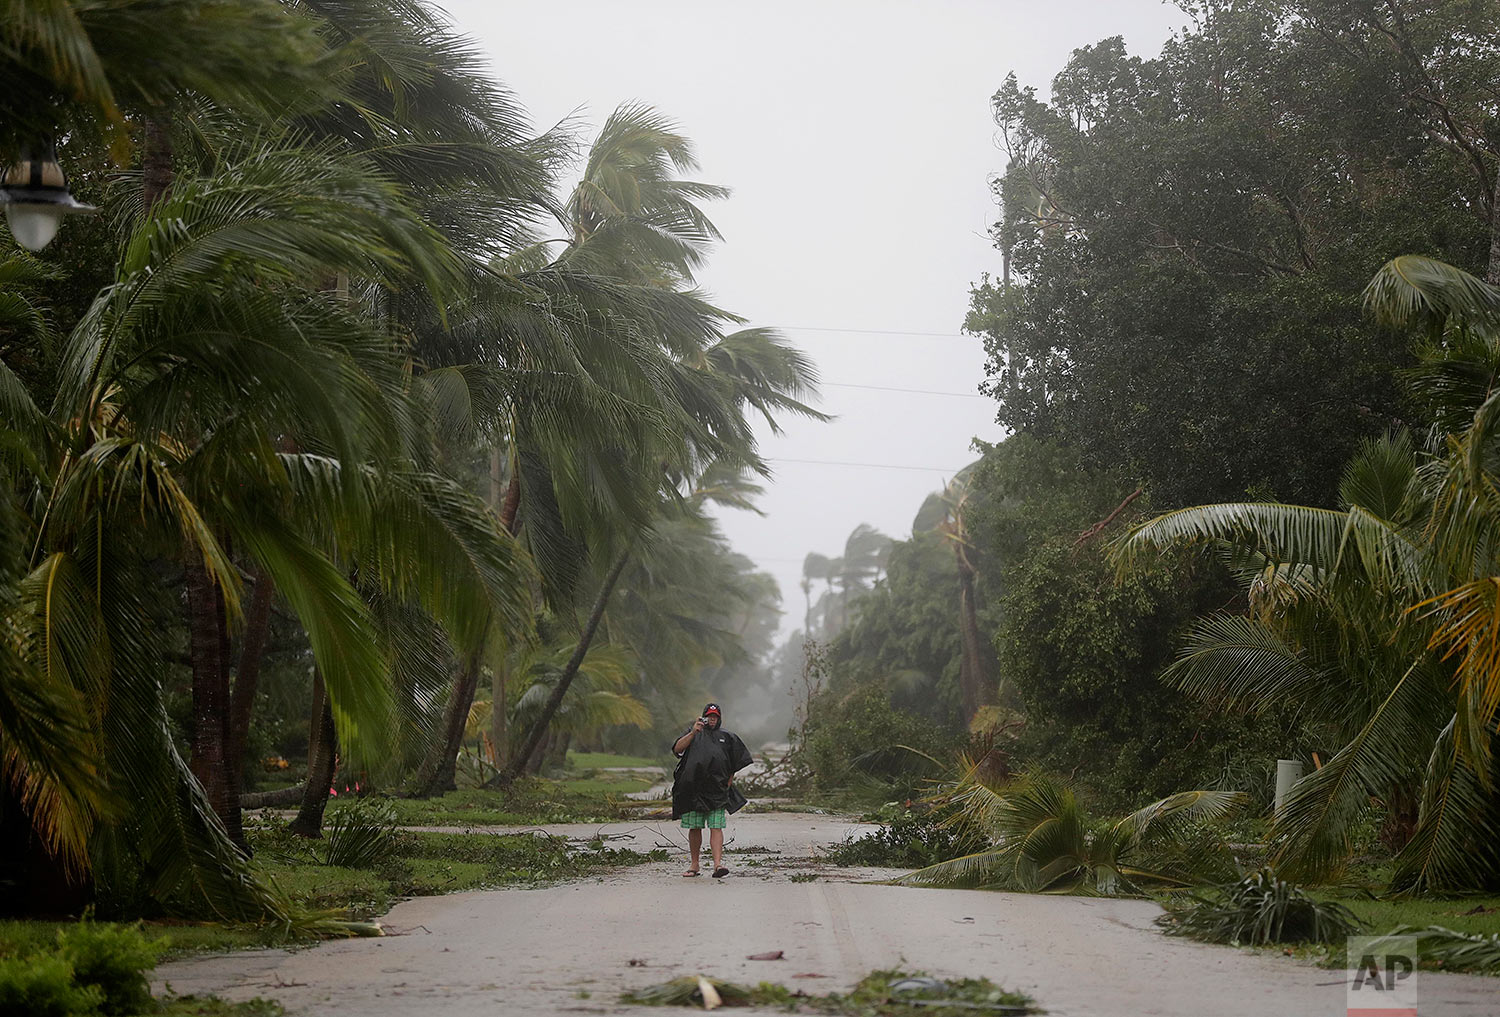  A person walks through a street lined with debris and fallen trees as Hurricane Irma passes through Naples, Fla., Sunday, Sept. 10, 2017. (AP Photo/David Goldman) 